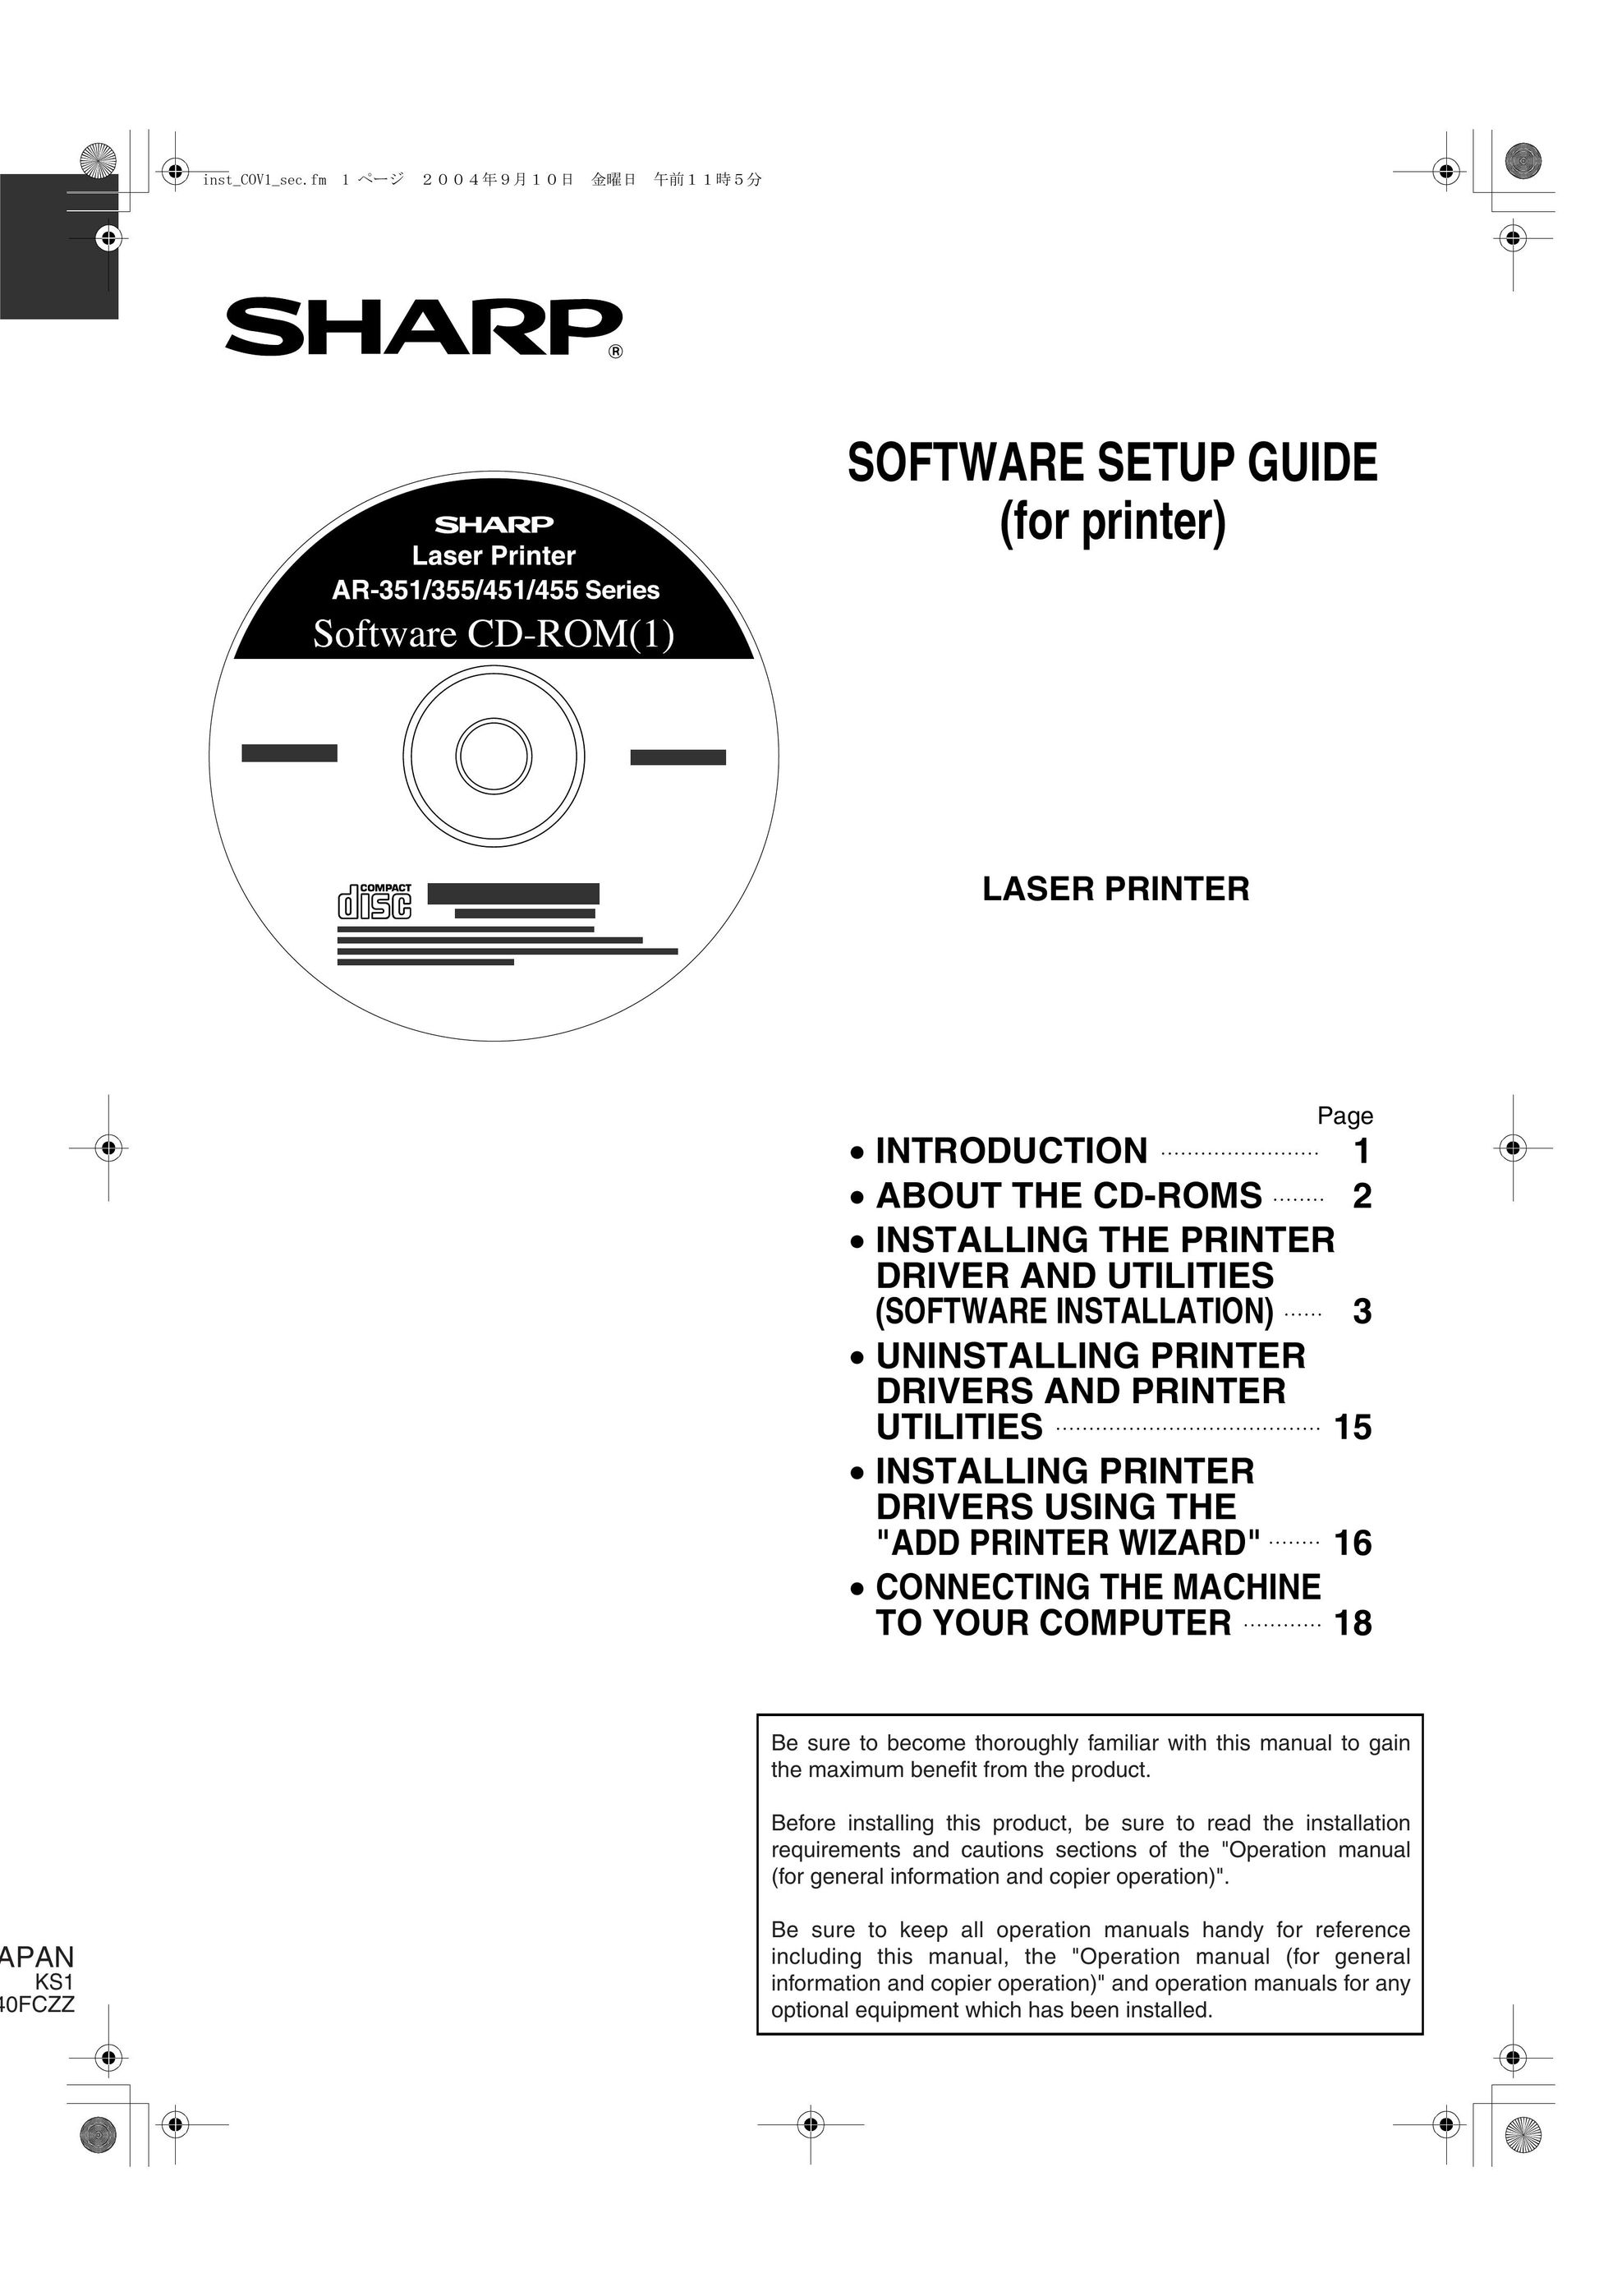 Sharp AR-455 Printer User Manual